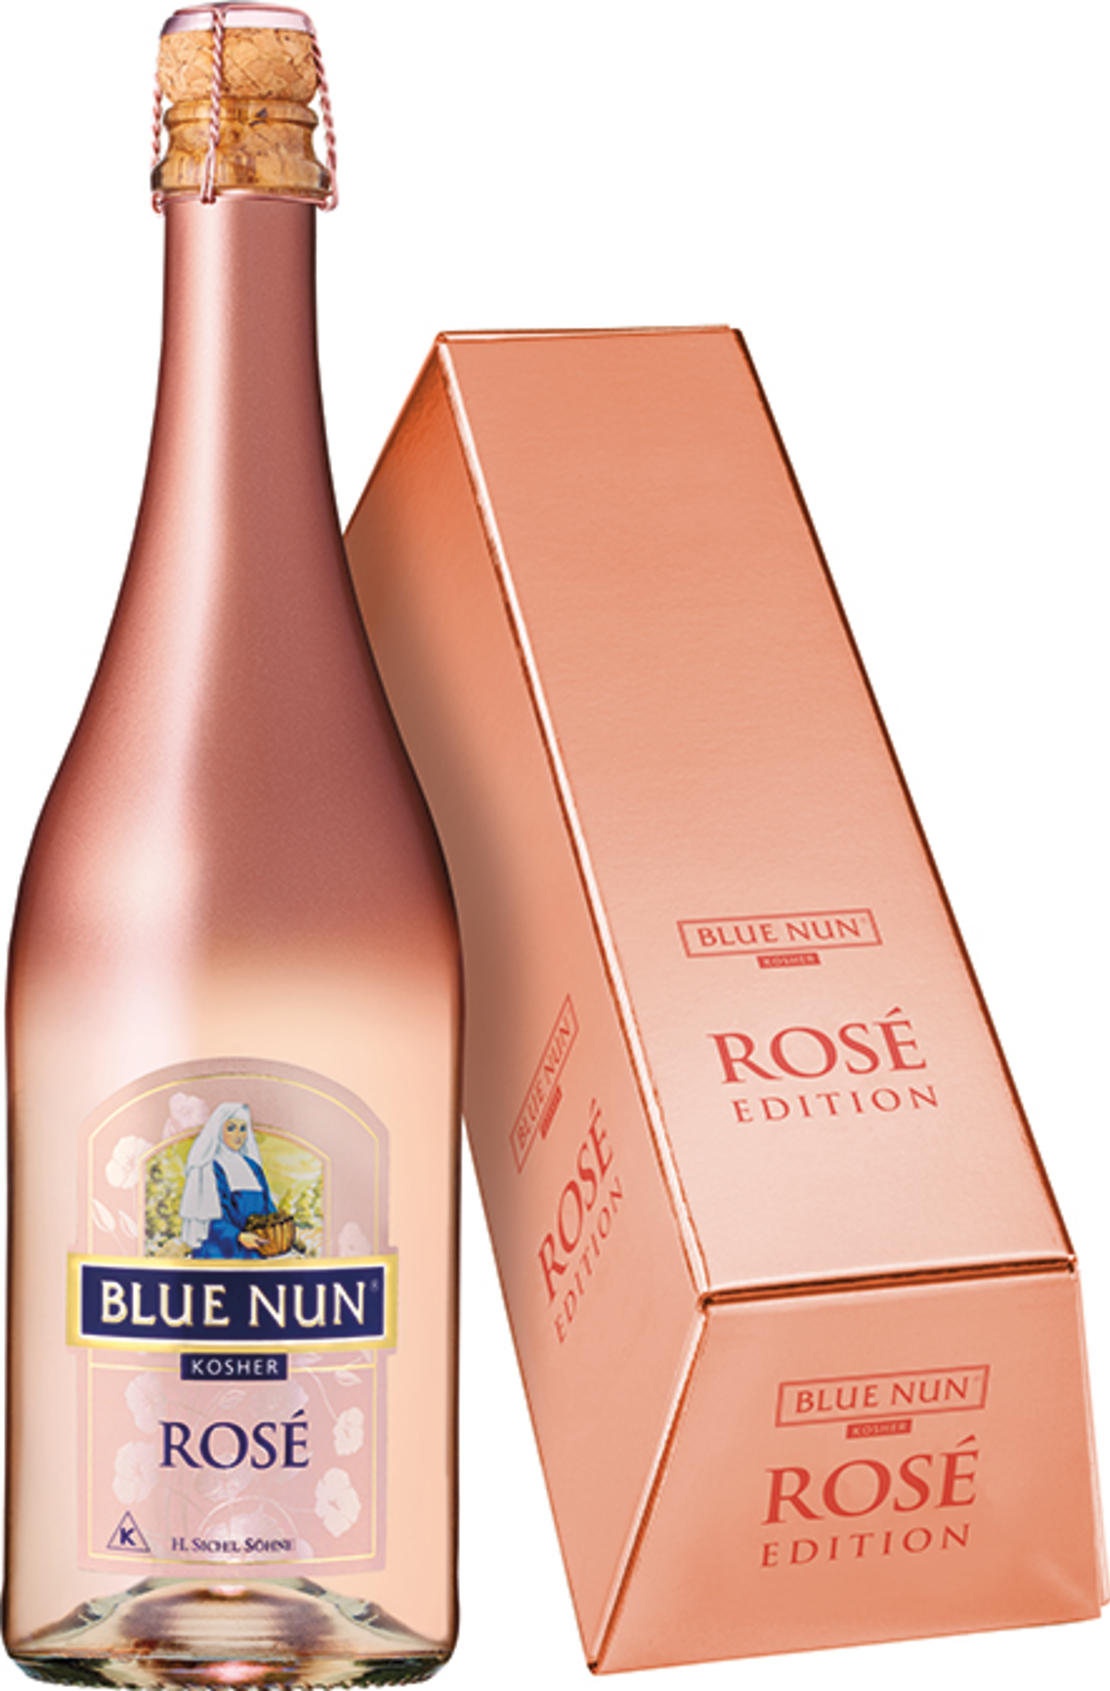 Blue Nun Sparkling Rosé in an Elegant Box | Kosher